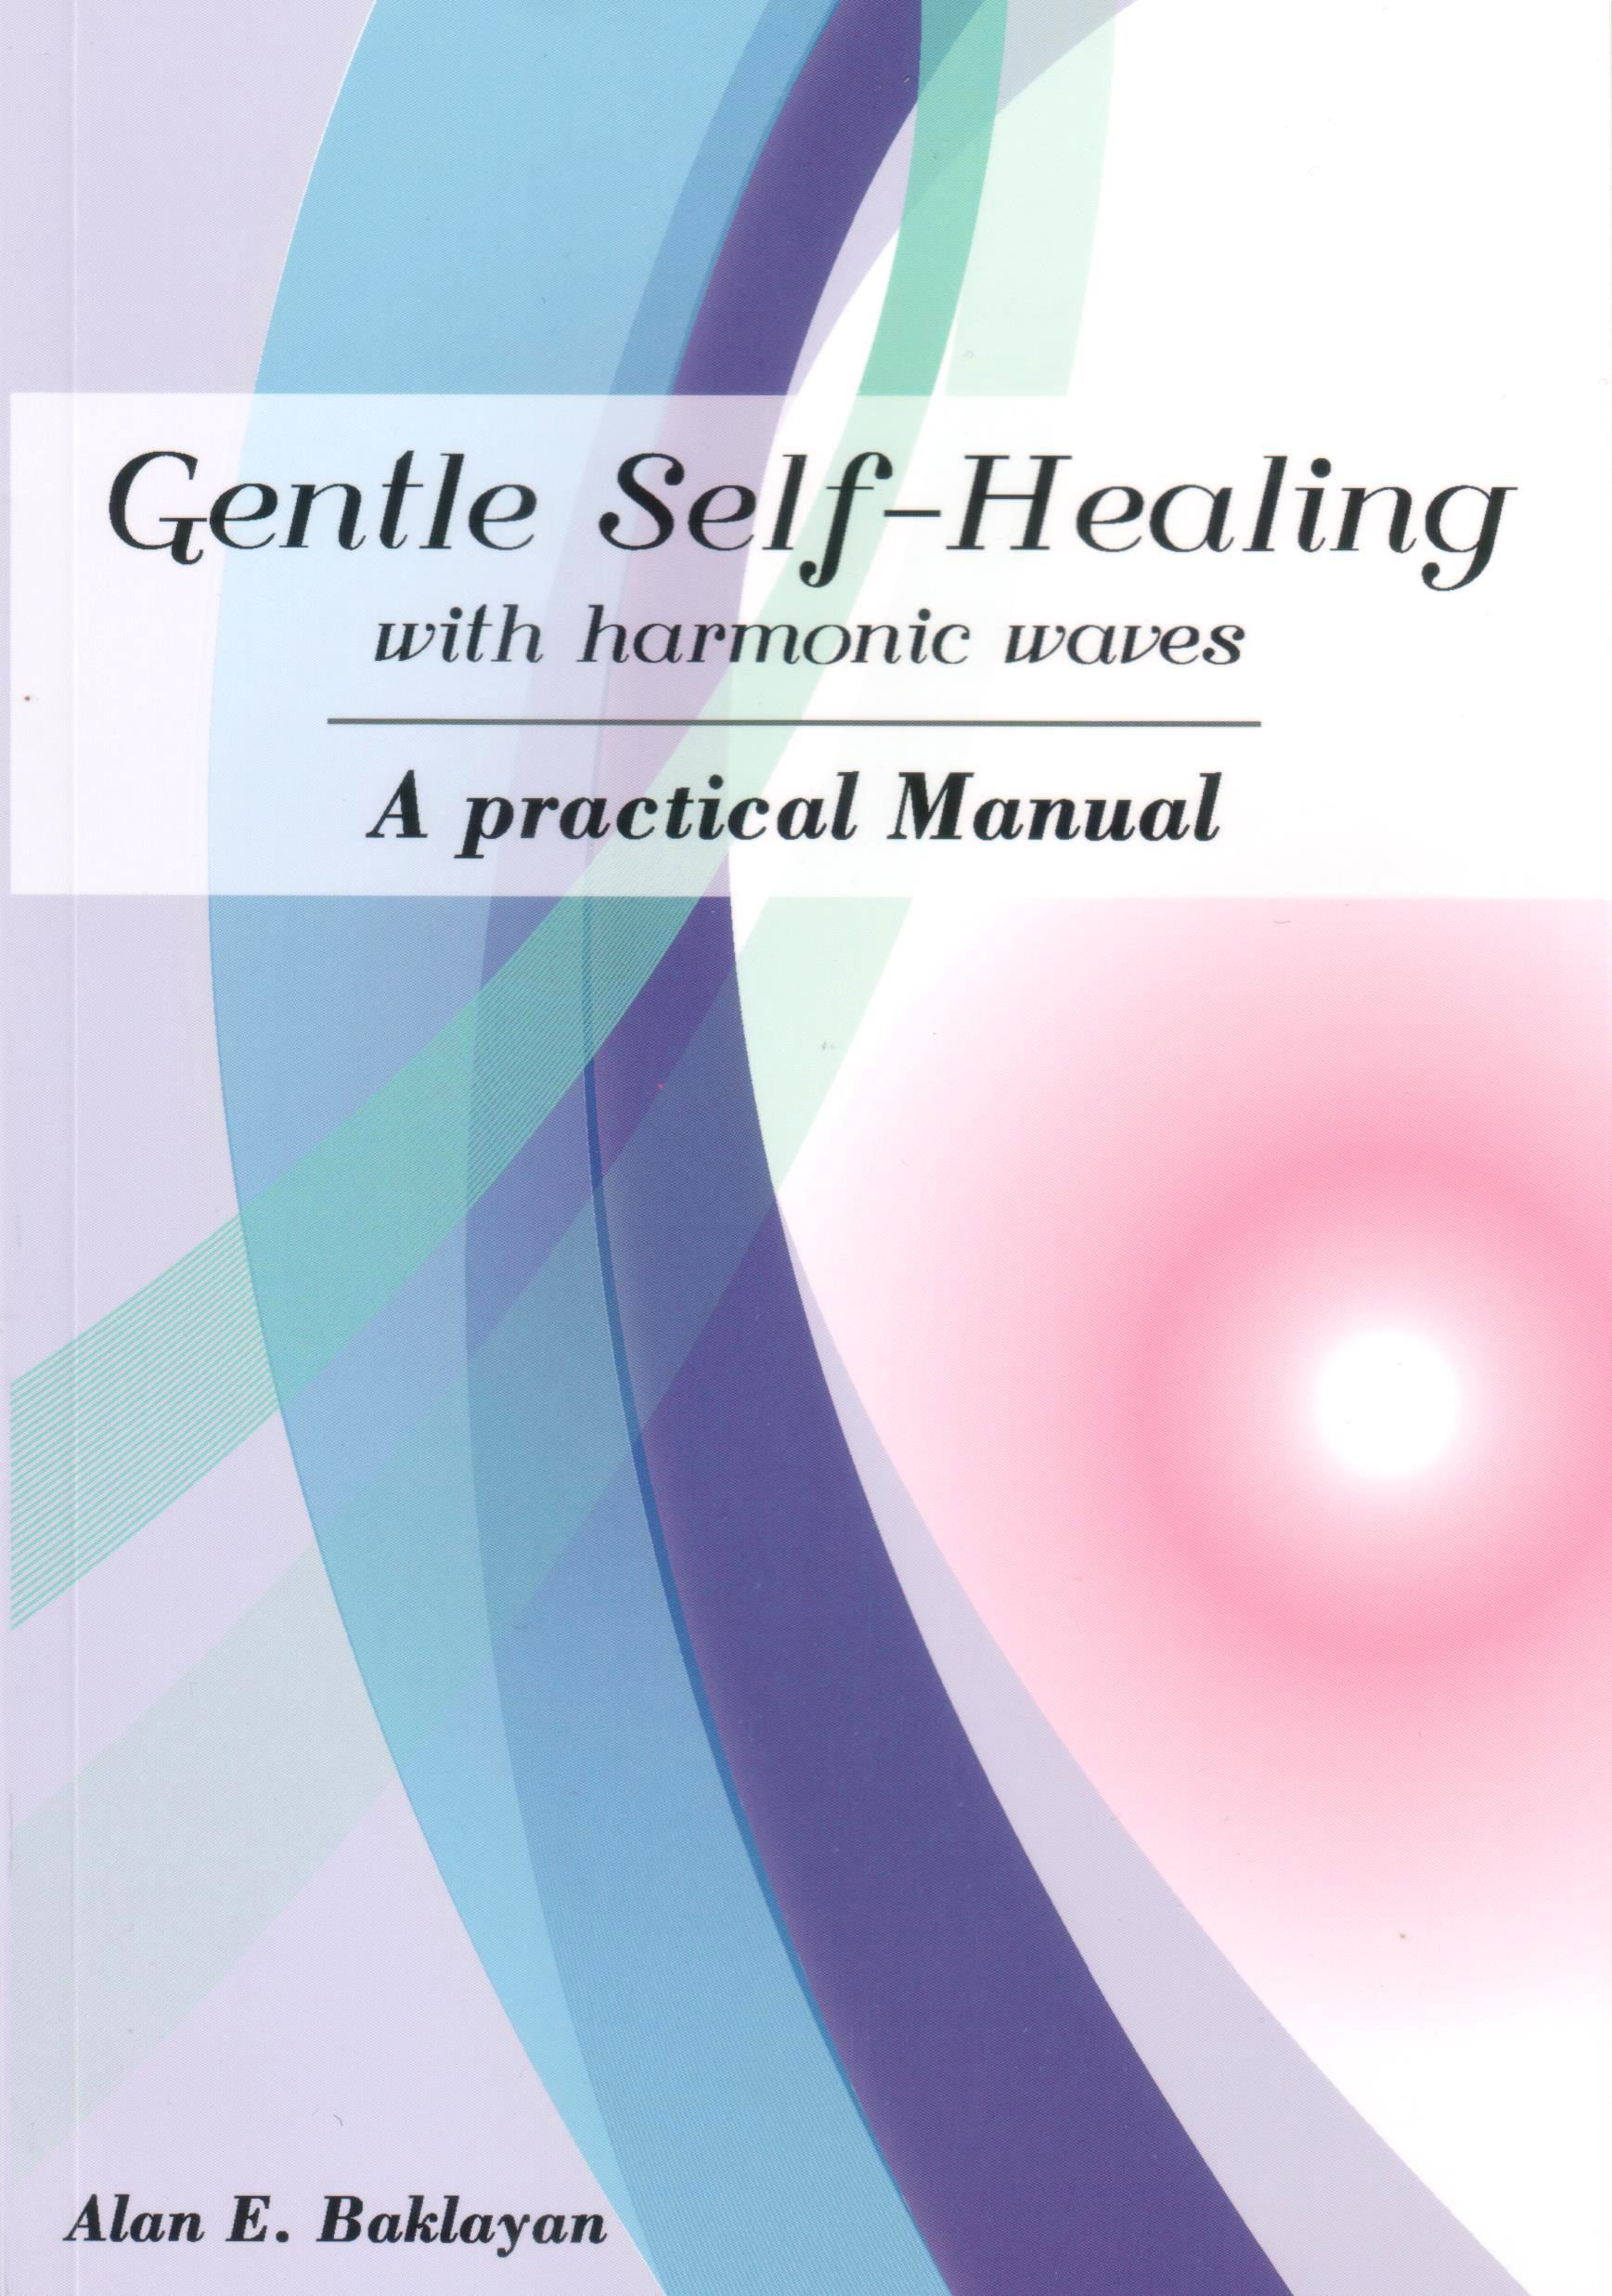 Gentle Self-Healing with harmonic waves - A practical Manual von Alan Baklayan auf englisch